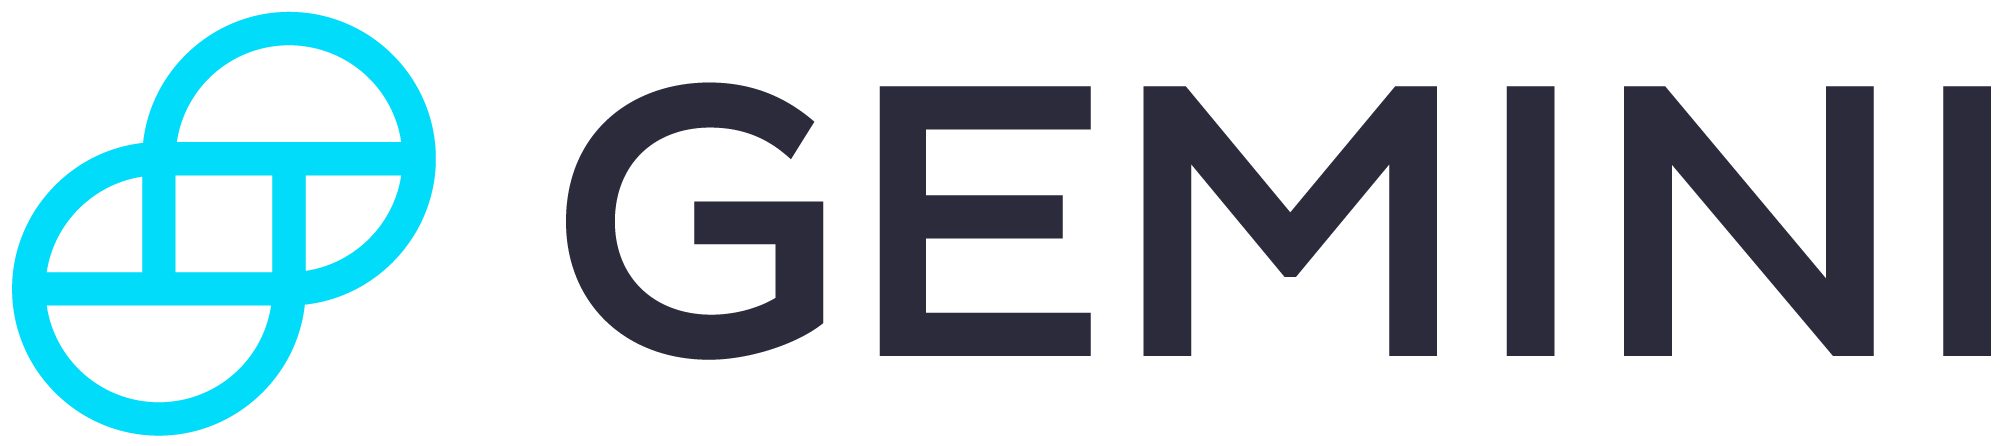 Gemini PNG image Transparente image